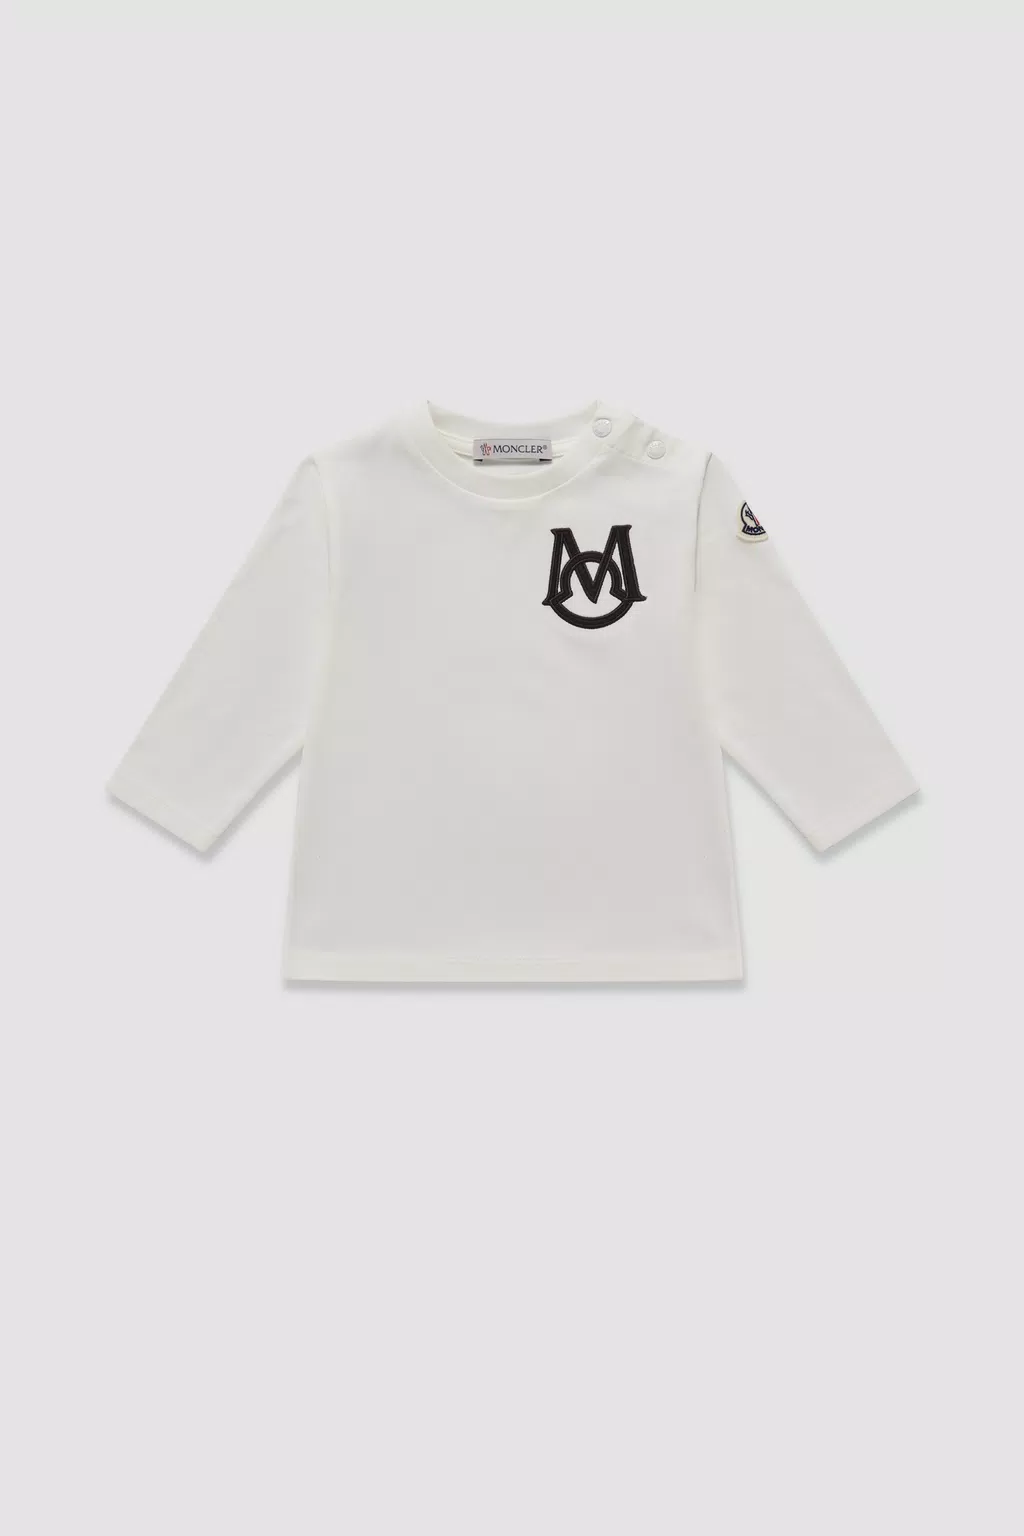 Monogram Long Sleeve T-Shirt Boy White Moncler 1